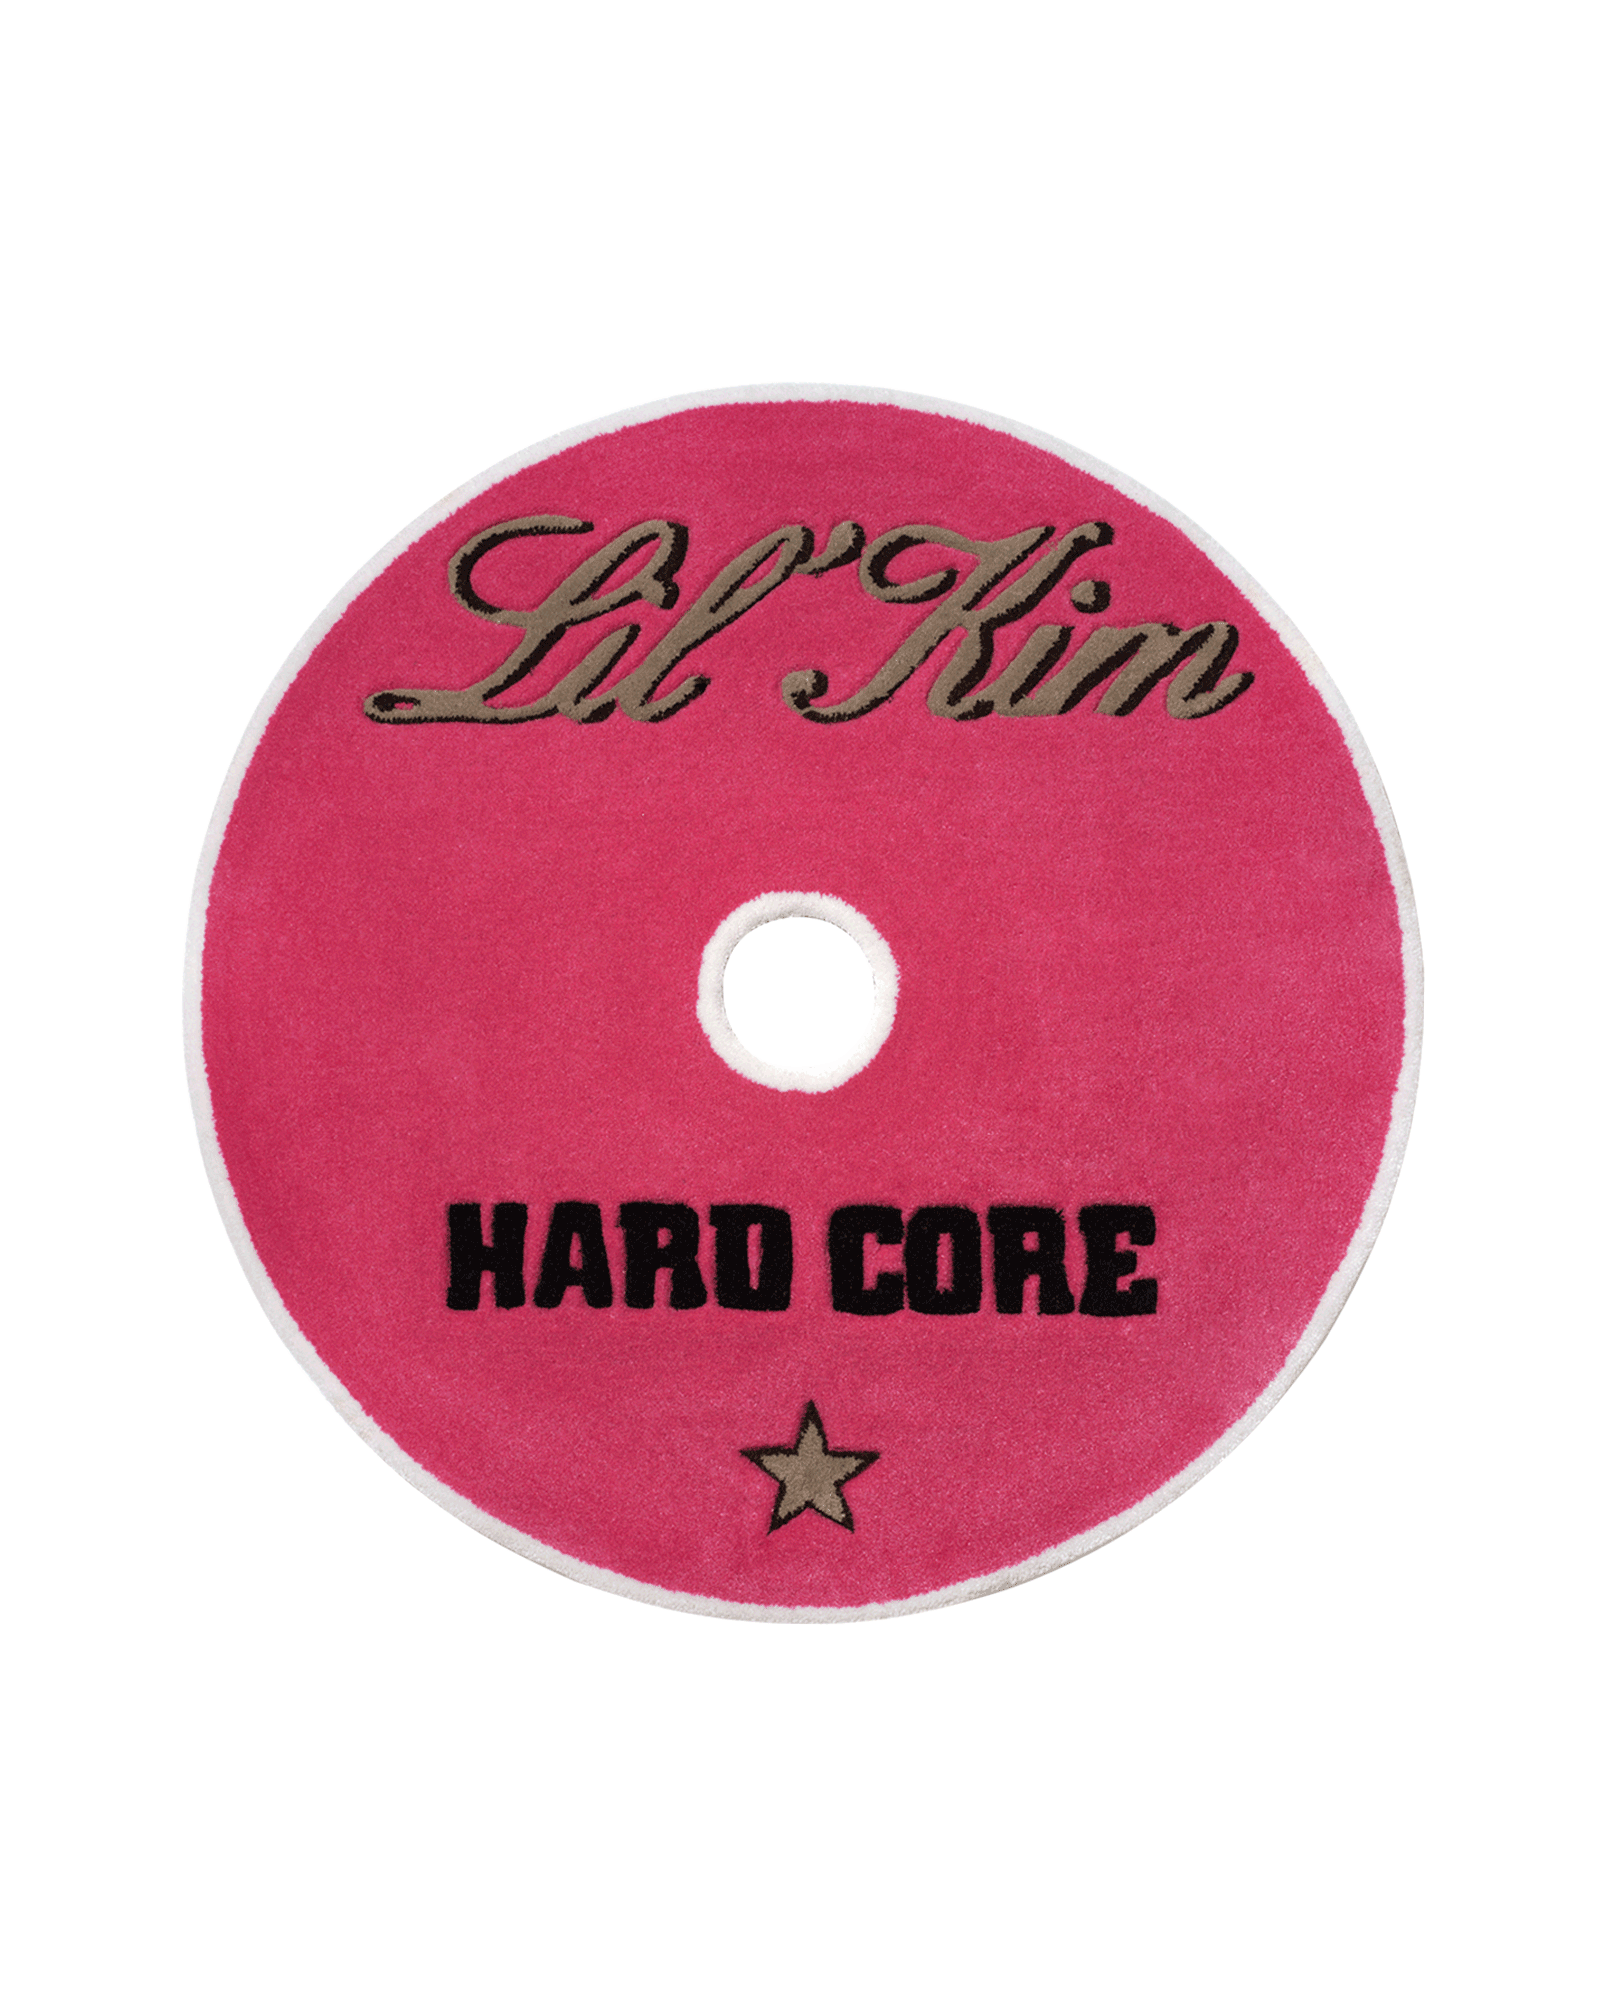 Handmade CD Rug (Lil Kim / Hardcore)